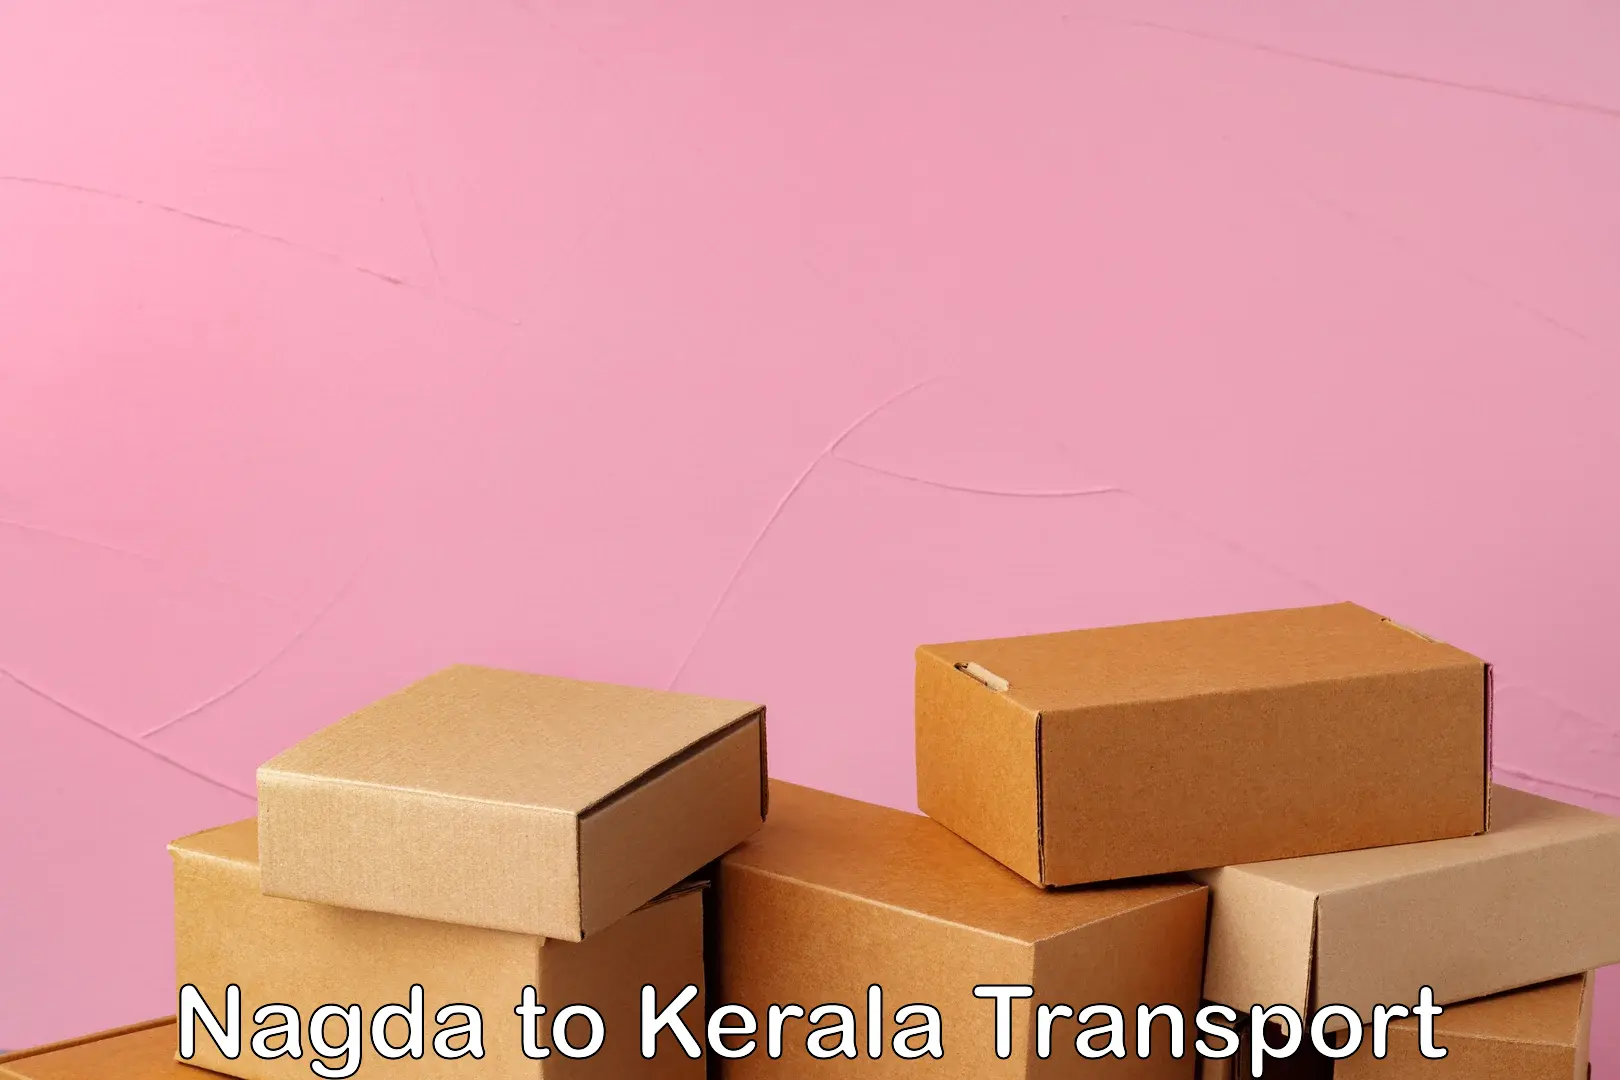 Truck transport companies in India Nagda to Kerala